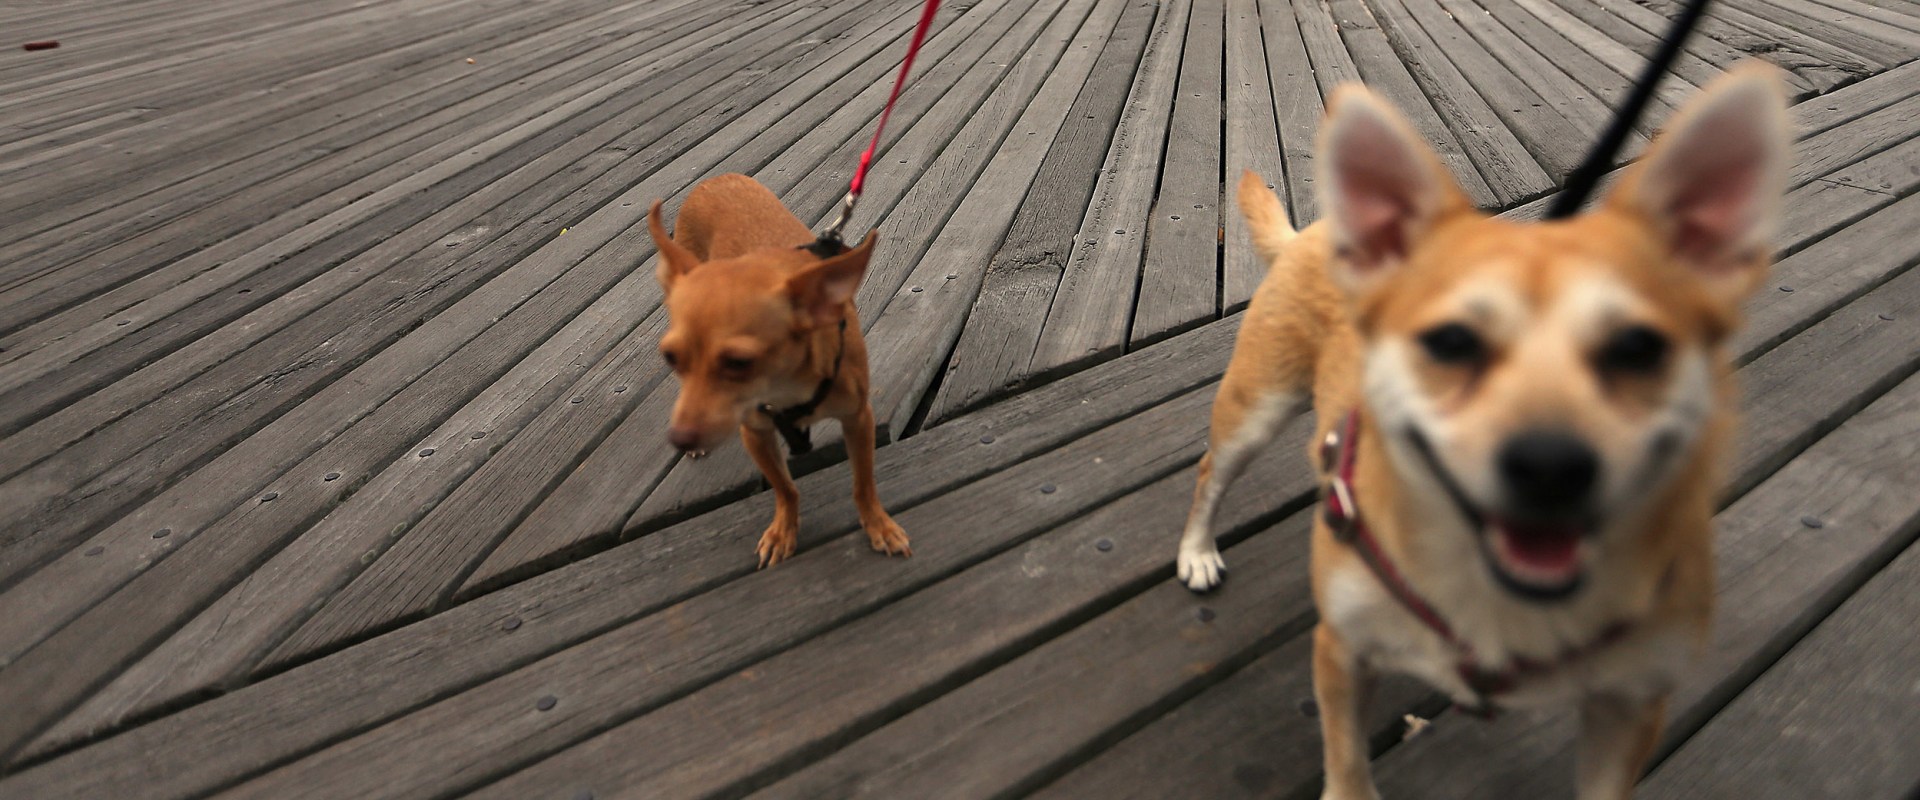 Does the boardwalk beach allow dogs?